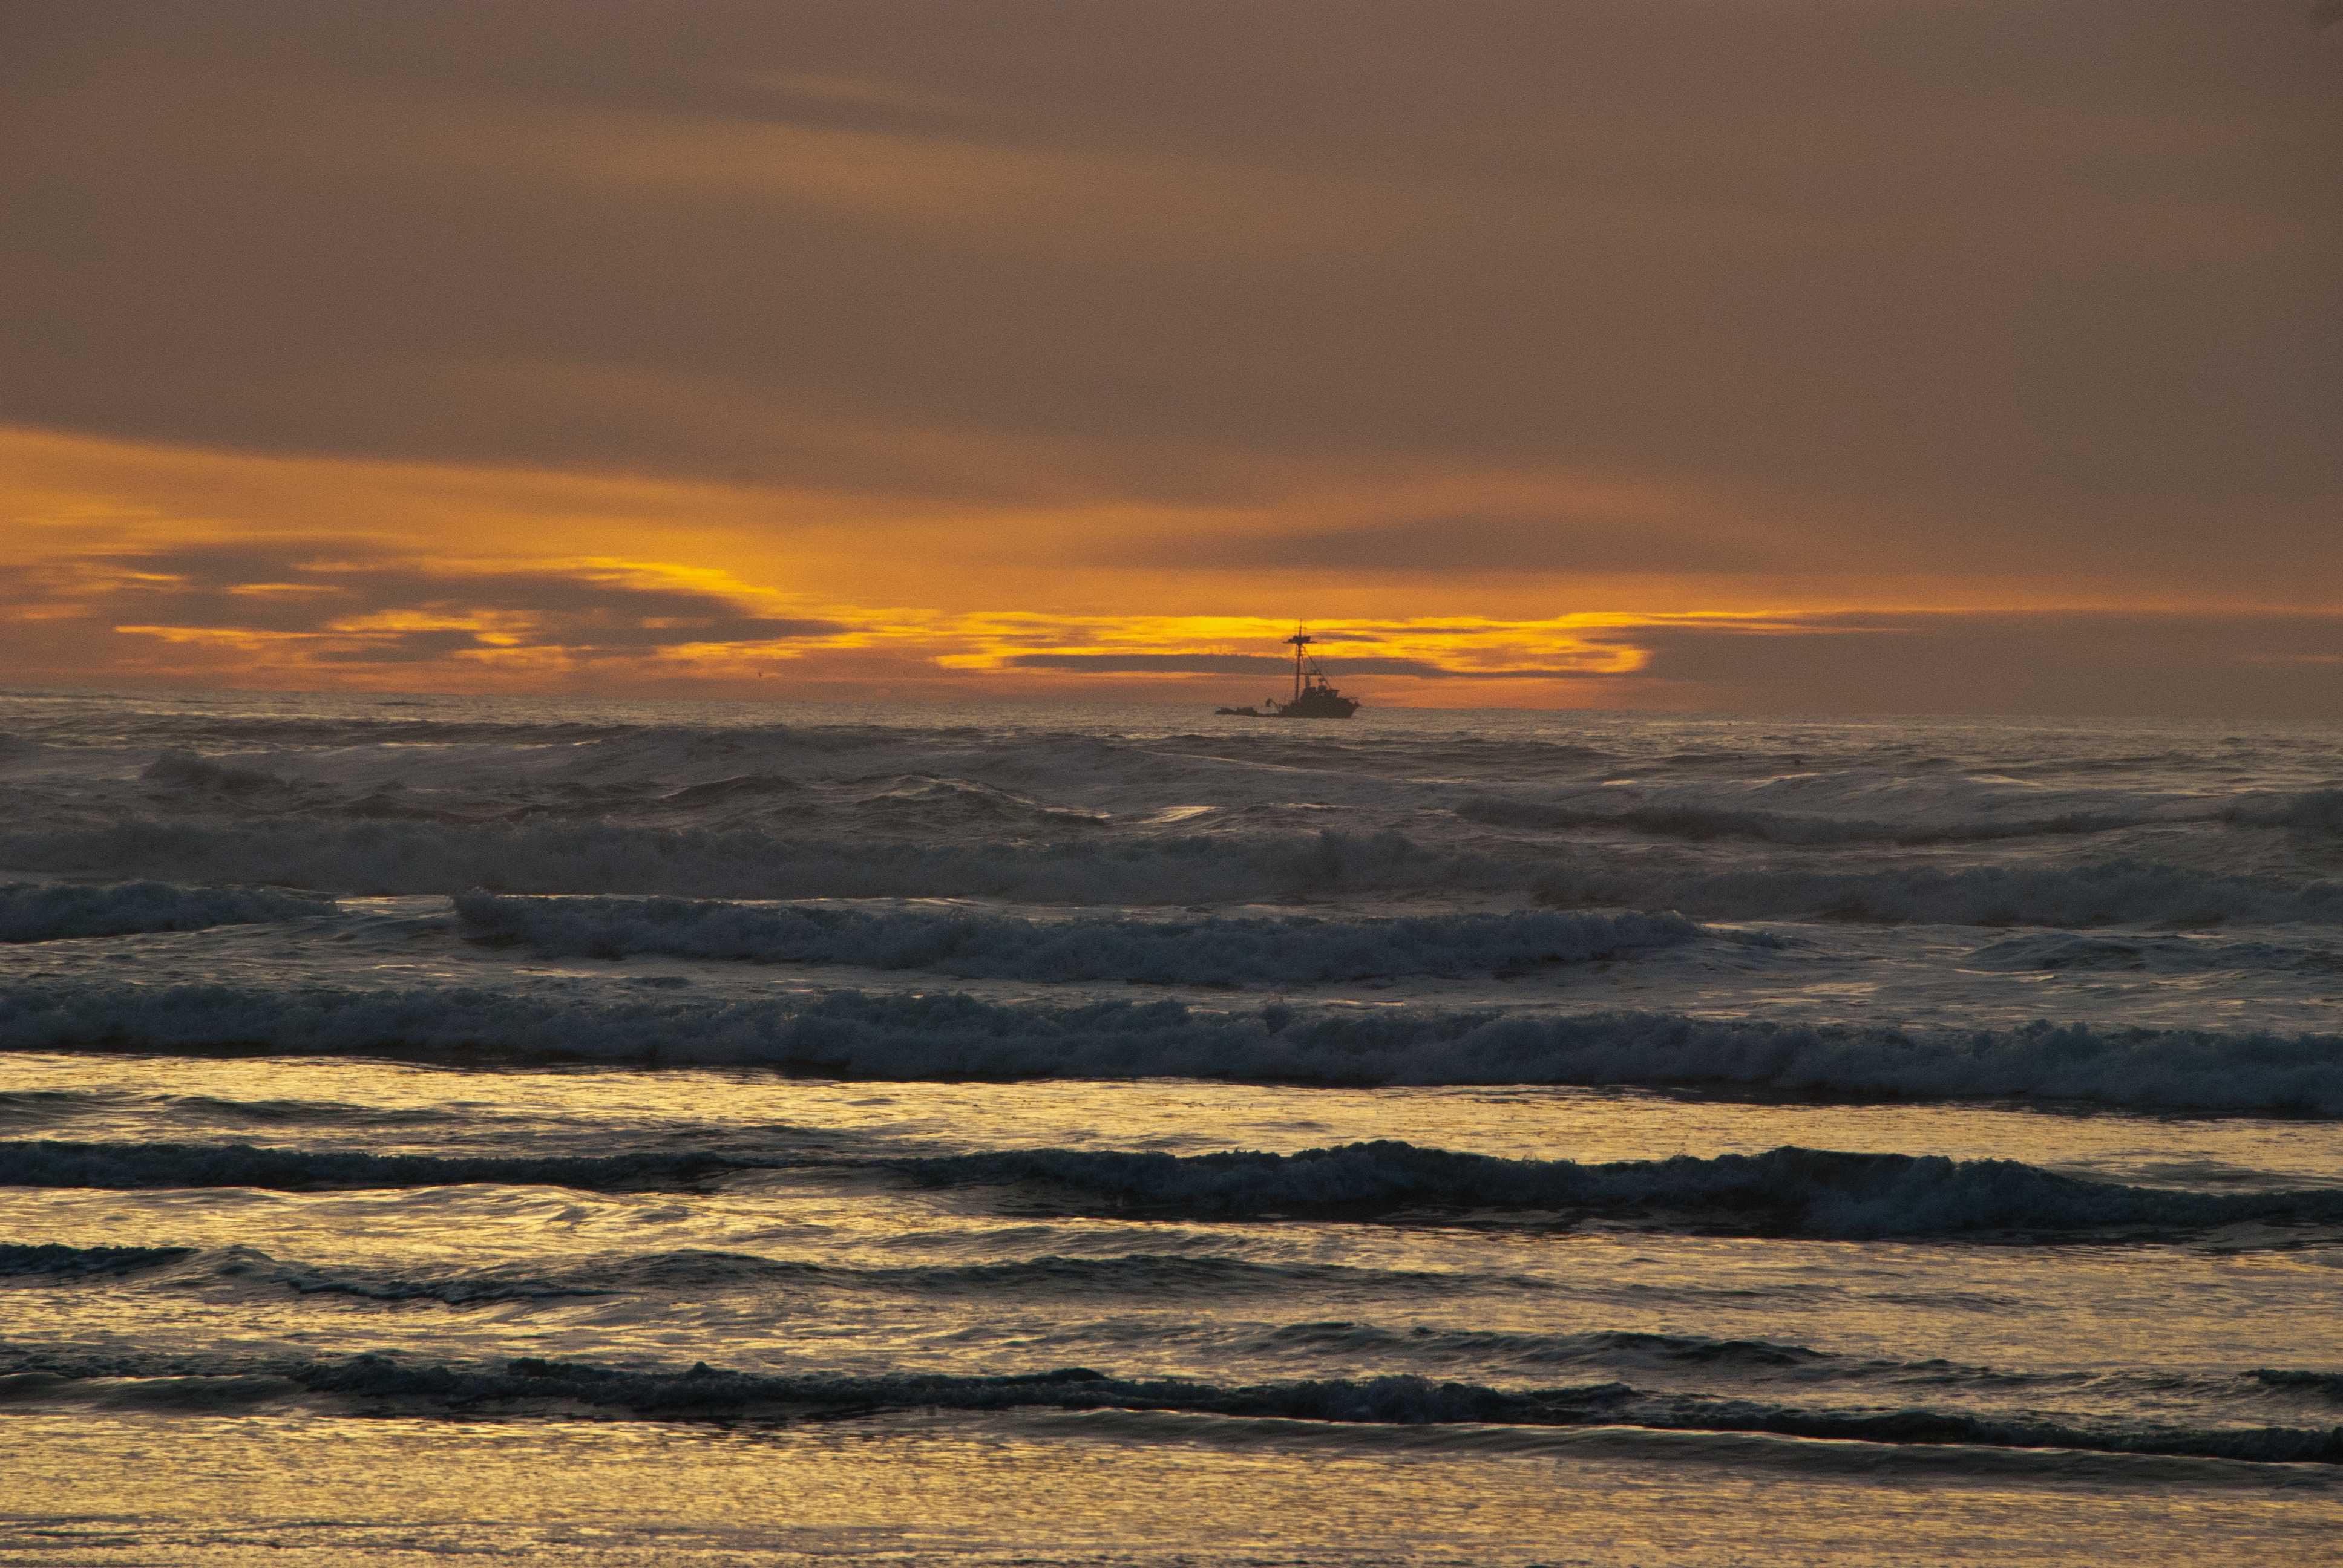 Canon Beach Sunset_03.jpg